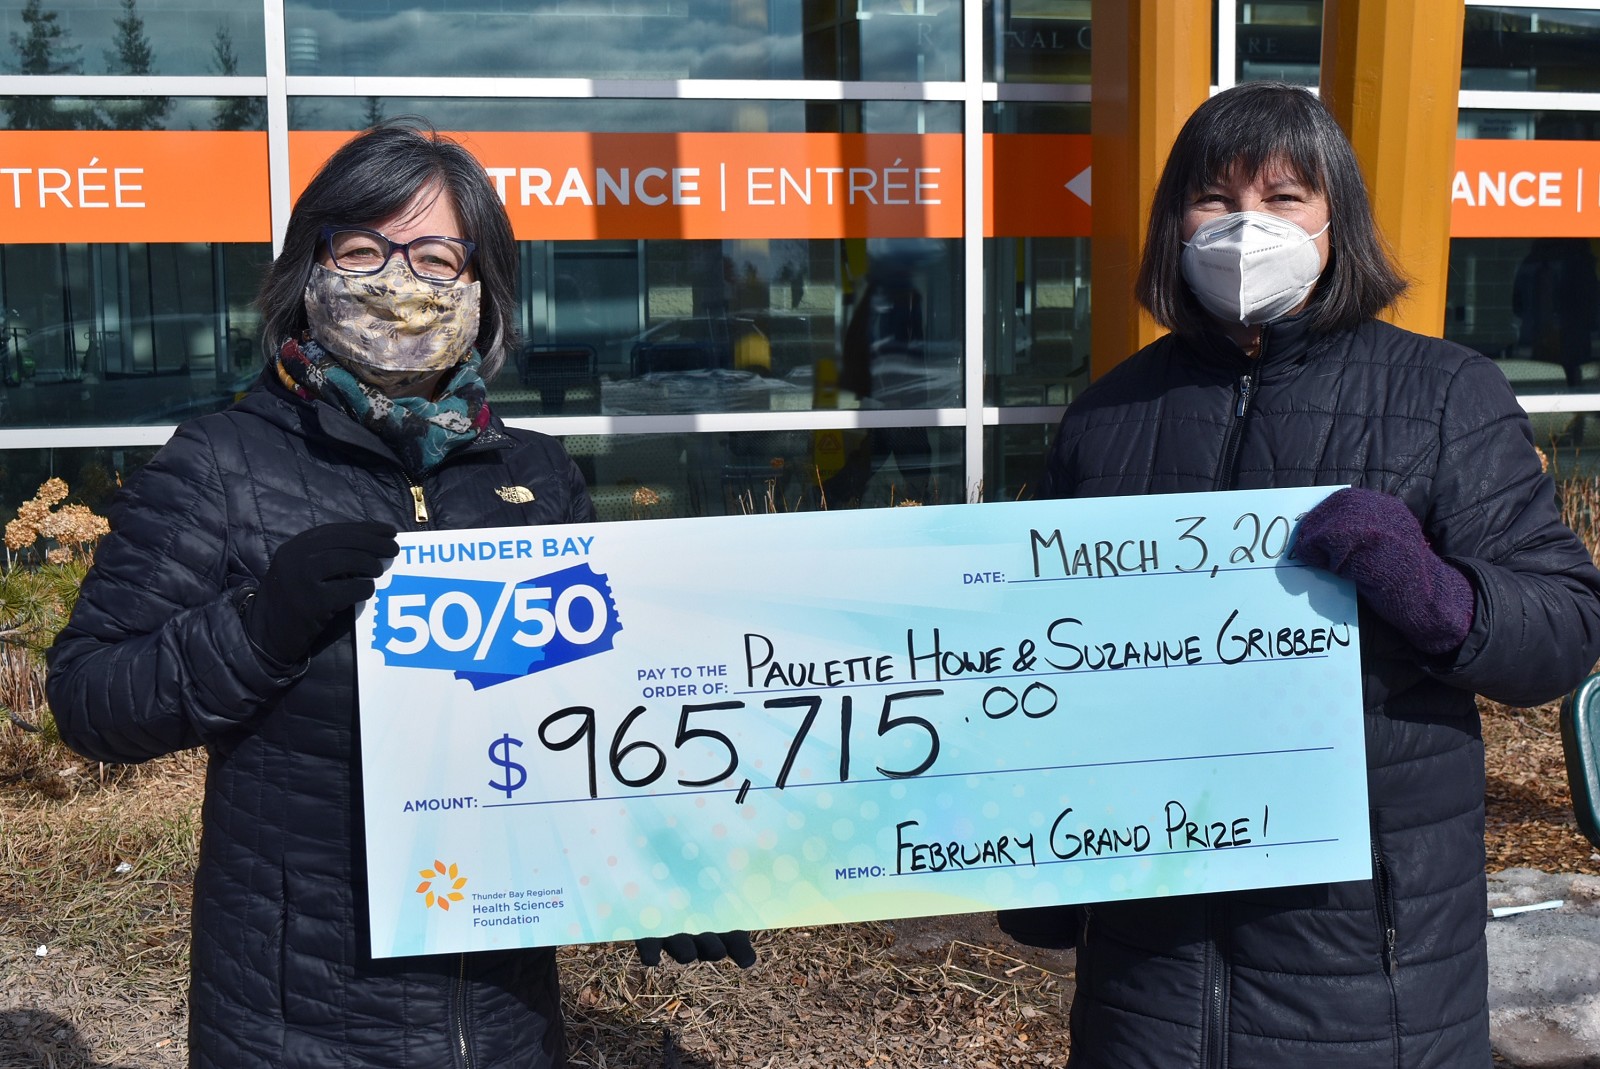 Thunder Bay 50/50: Meet February's Grand Prize winners of $965,715! 